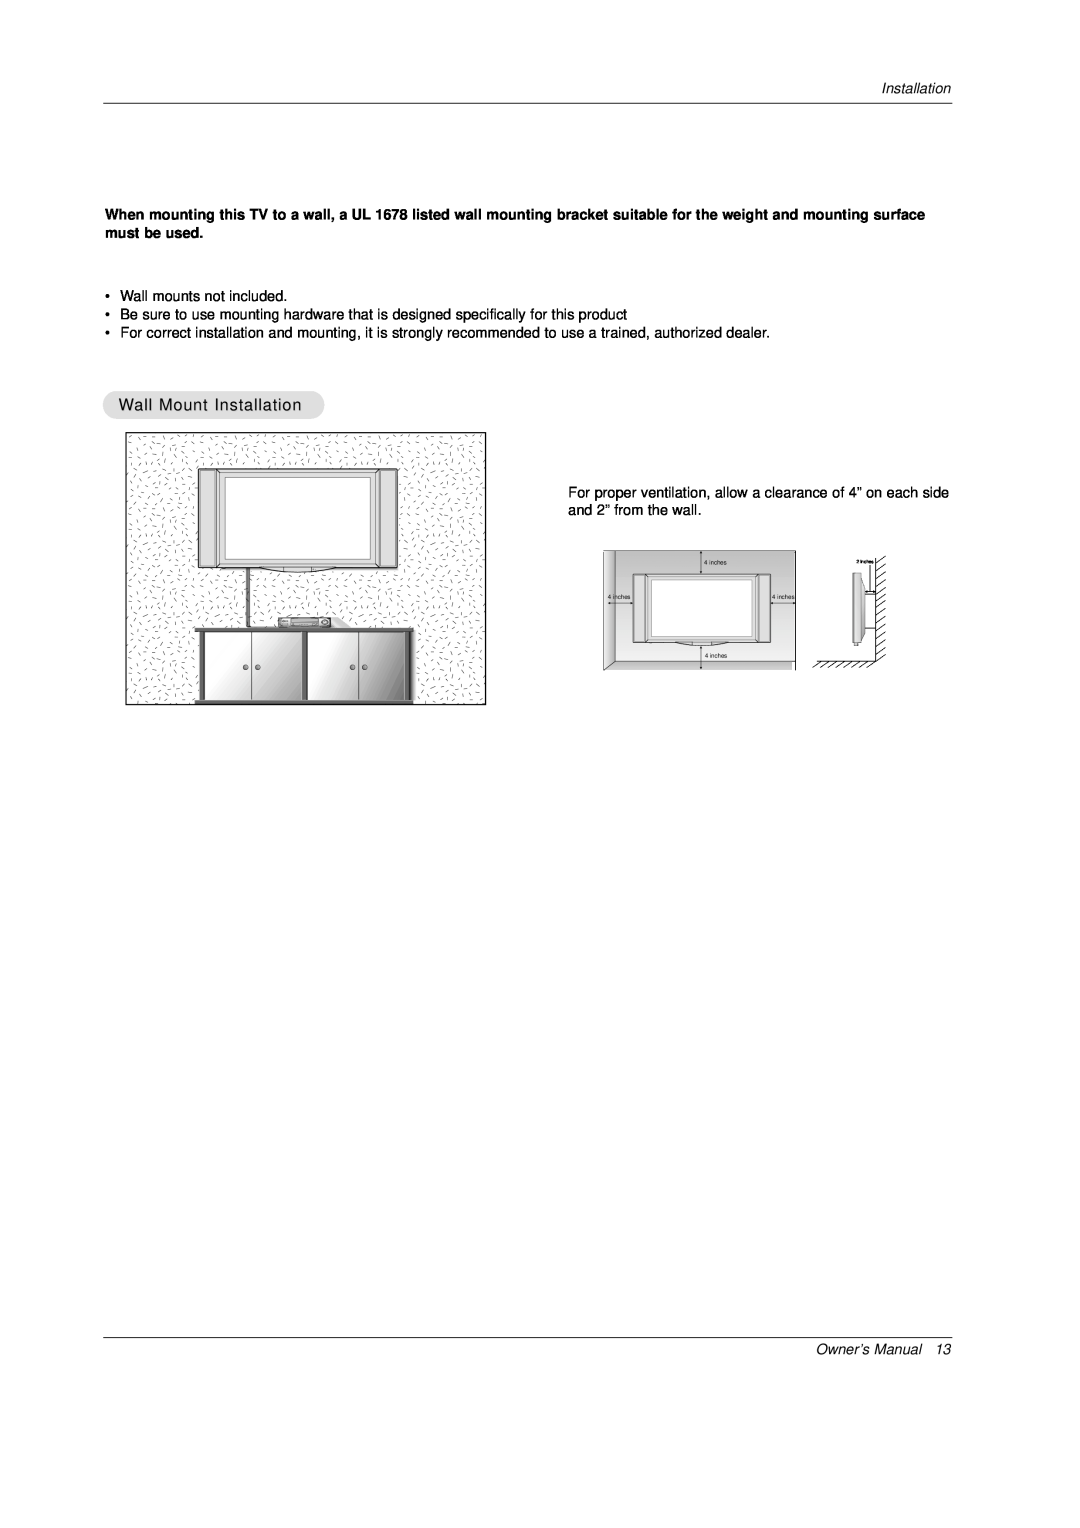 Mitsubishi Electronics PD-4225S manual Wall Mount Installation, Owner’s Manual 